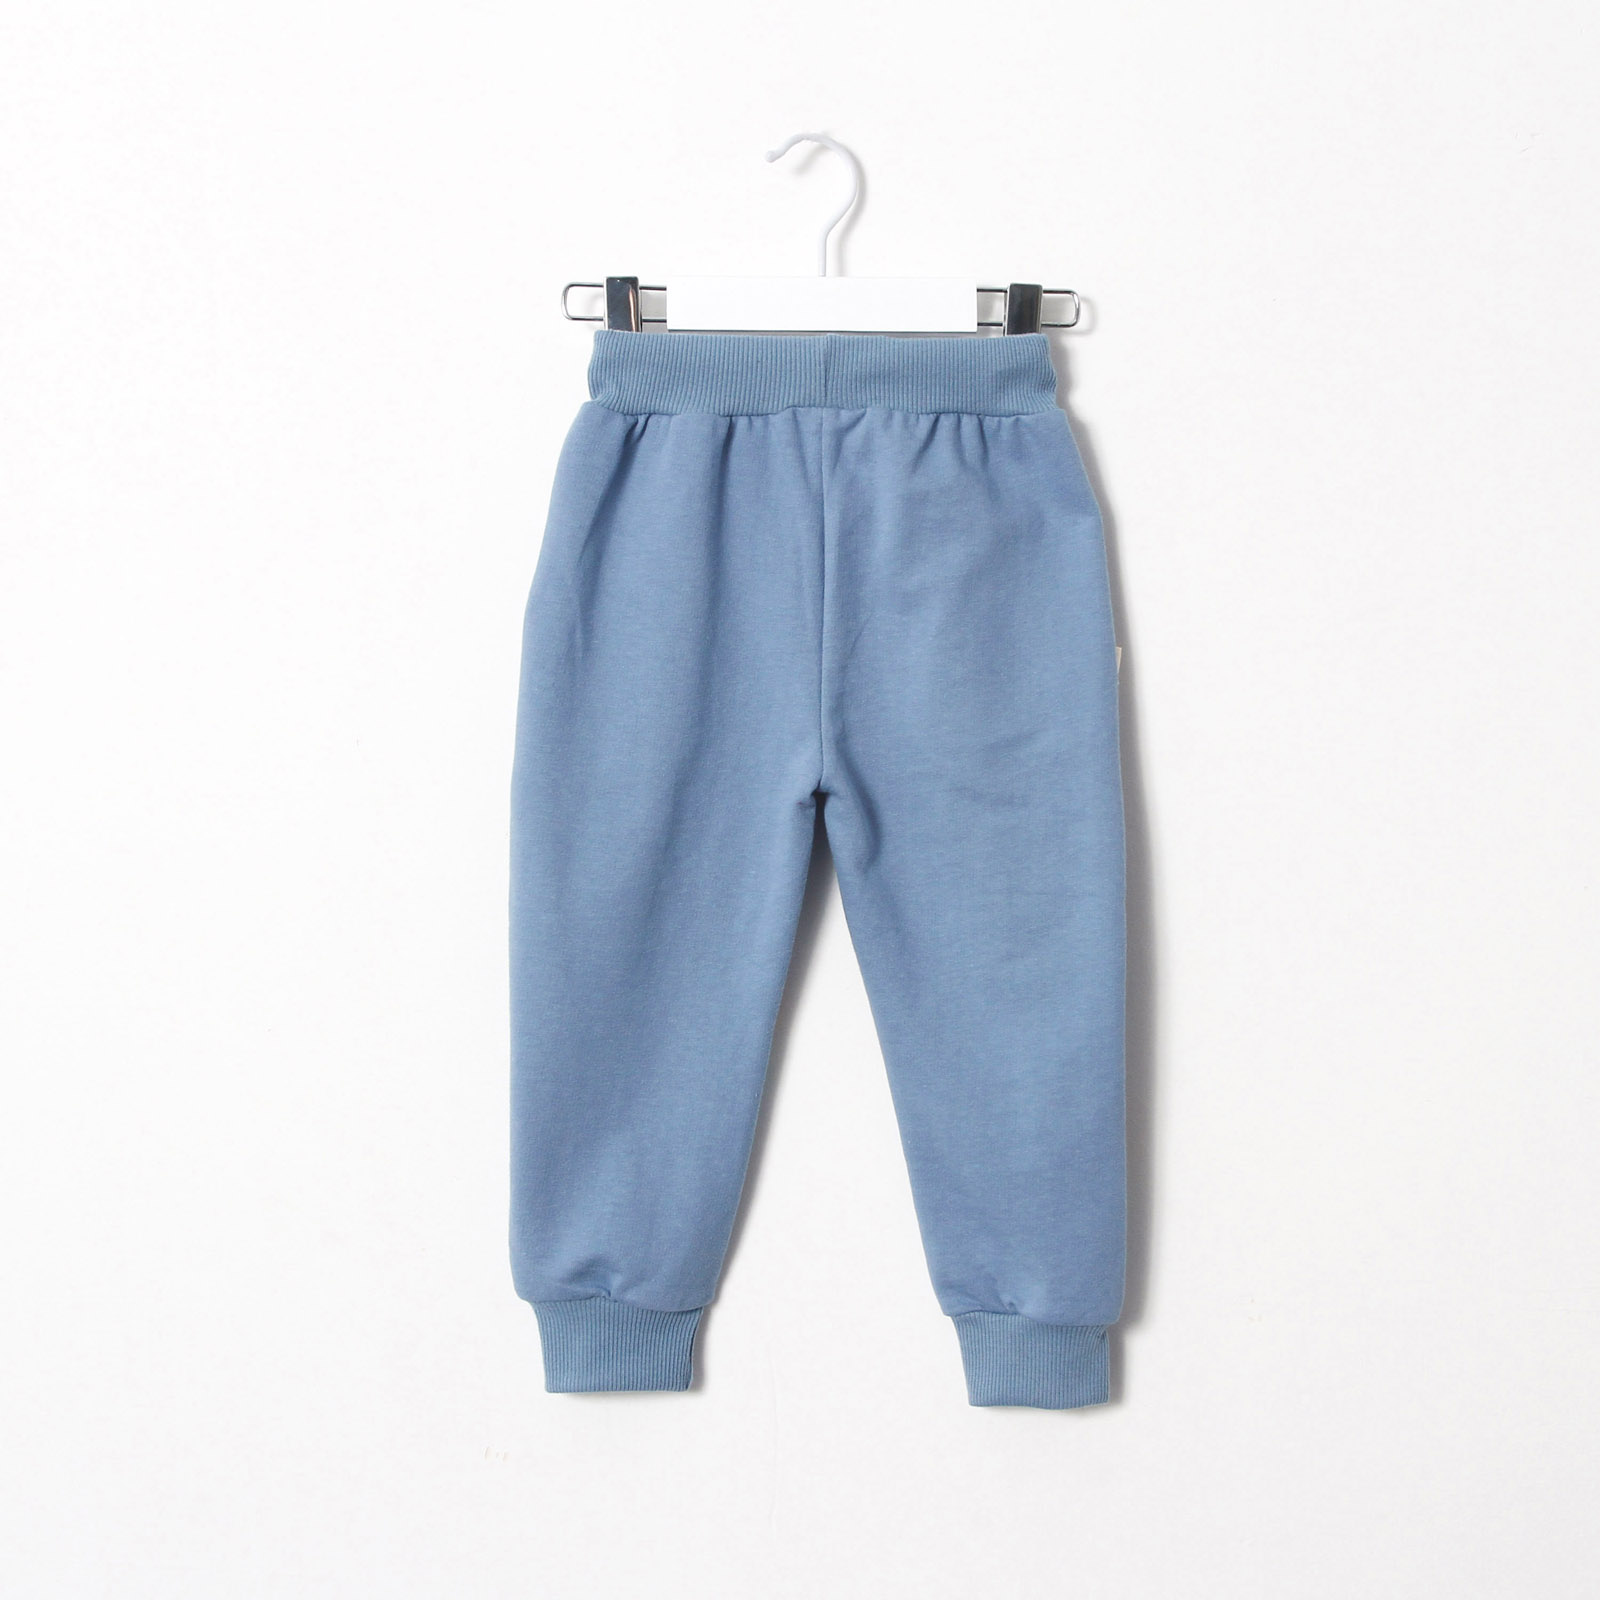 Boy's Blue Pants in Print